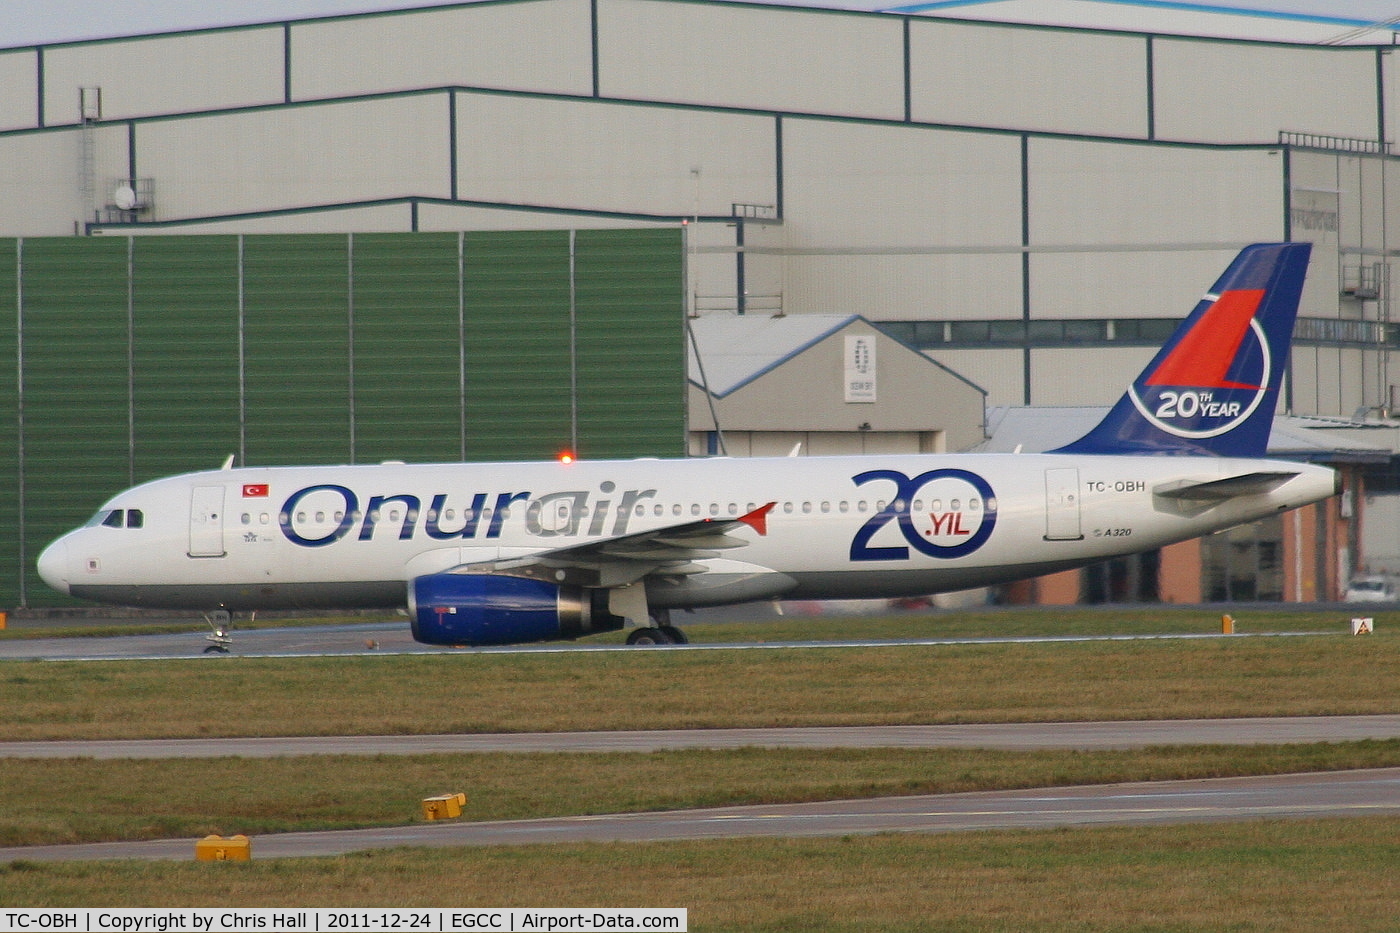 TC-OBH, 2001 Airbus A320-233 C/N 1482, Onur Air A320 now wearing 20th anniversary markings